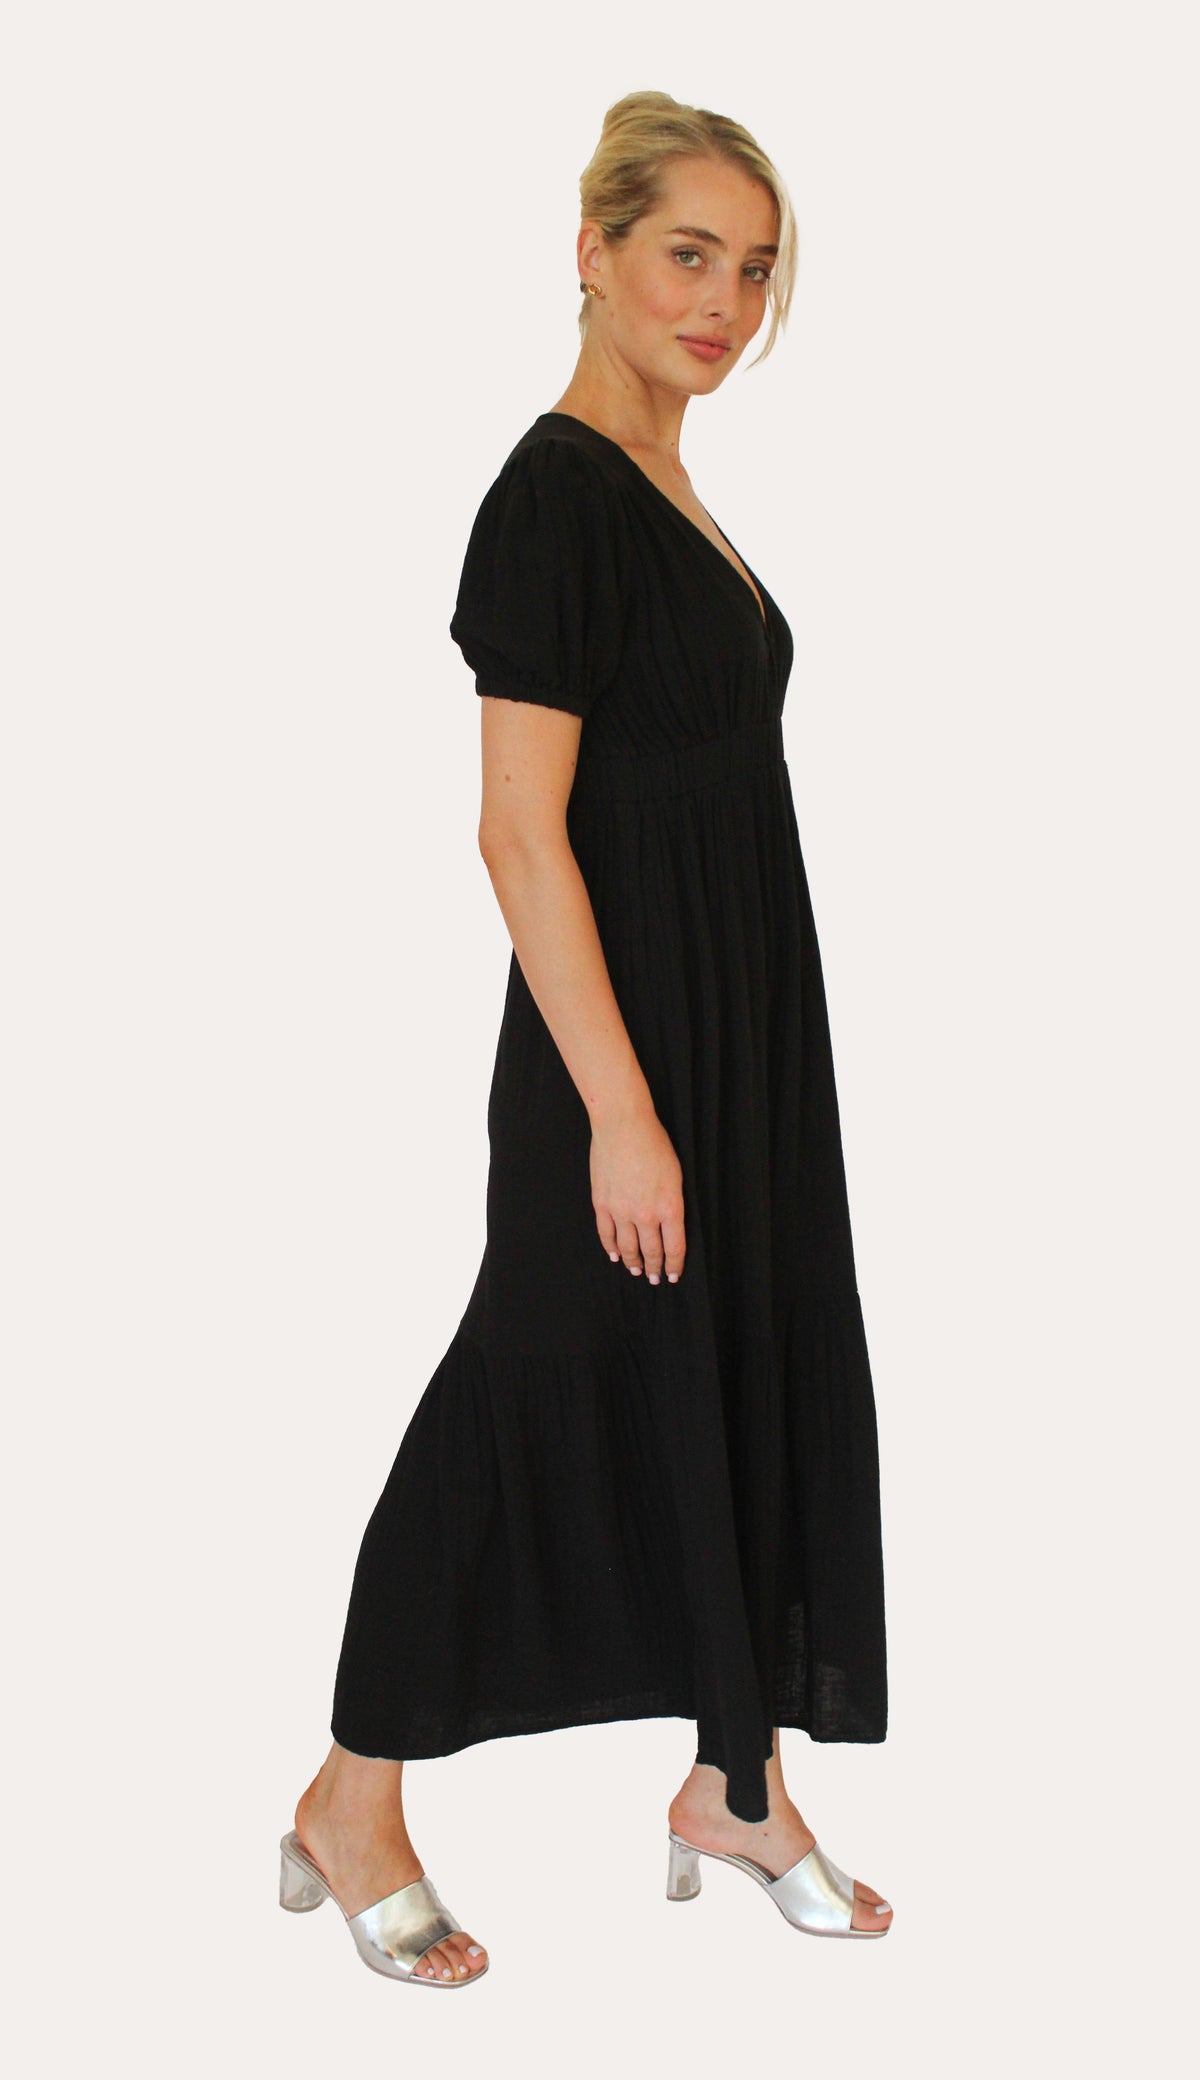 Olive Dress - Black